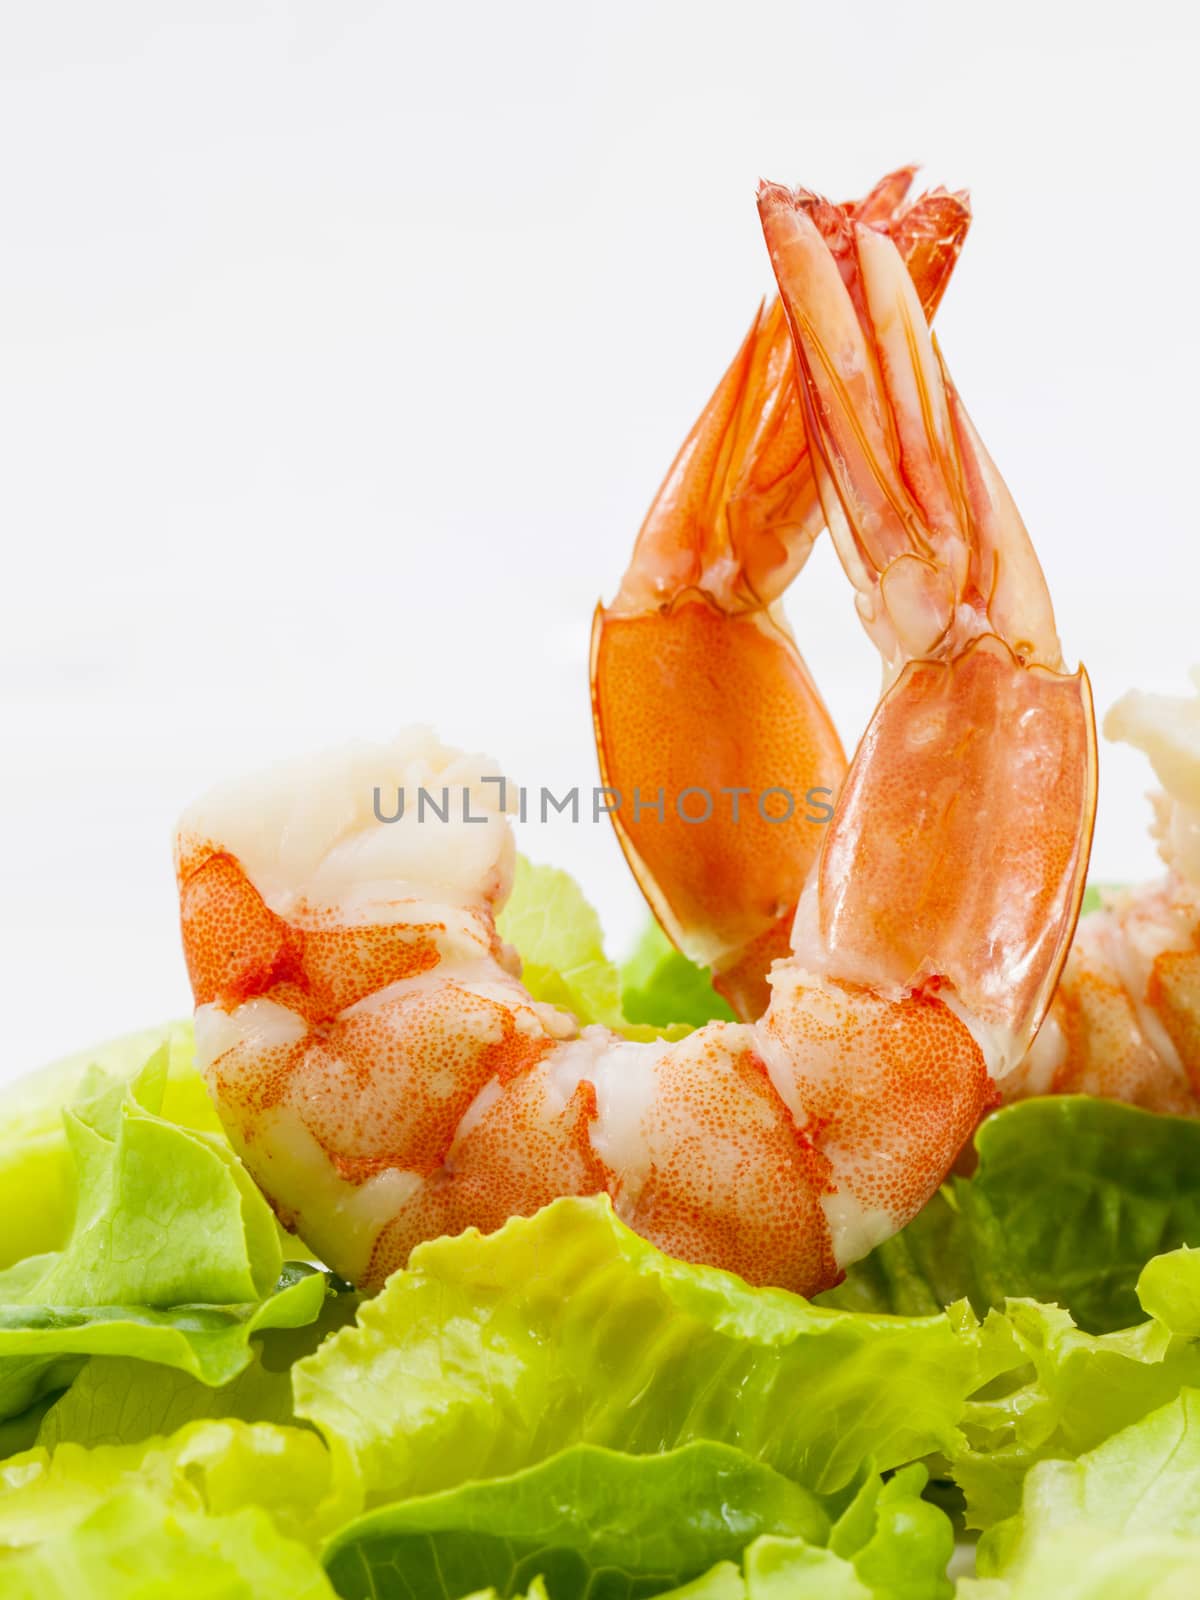 Mixed green salad with shrimps